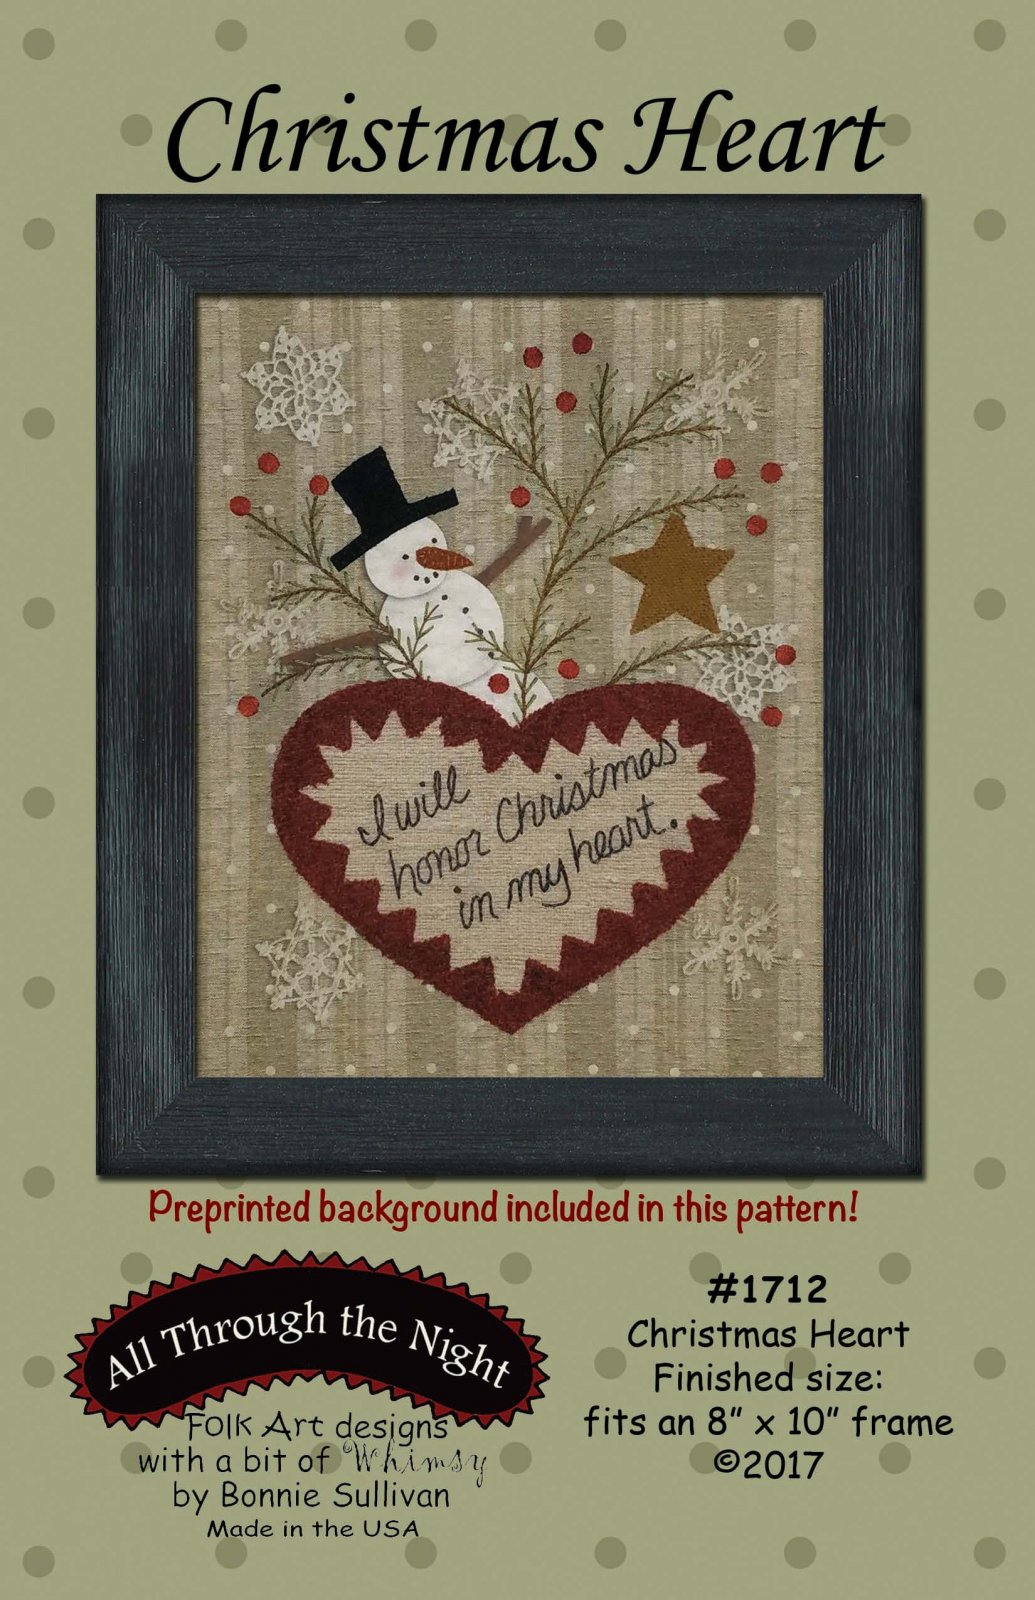 1712 - Christmas Heart